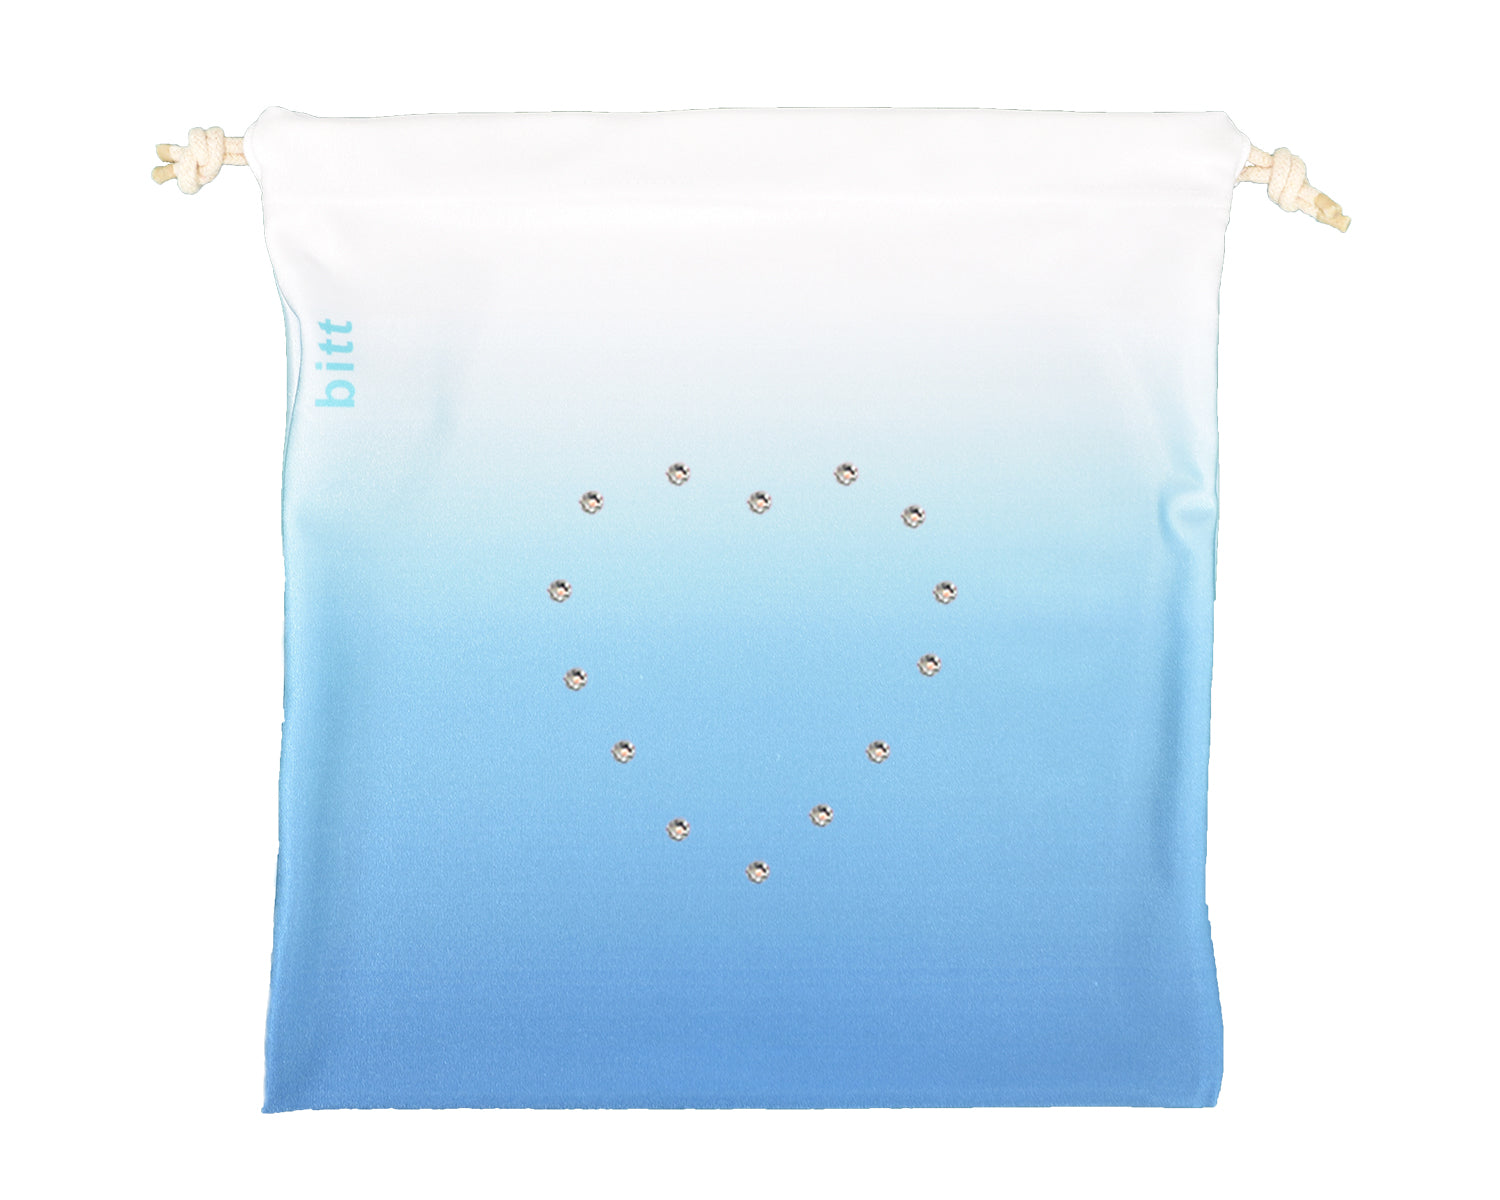 Gymnastics Grip Bag - Turquoise & White Ombre